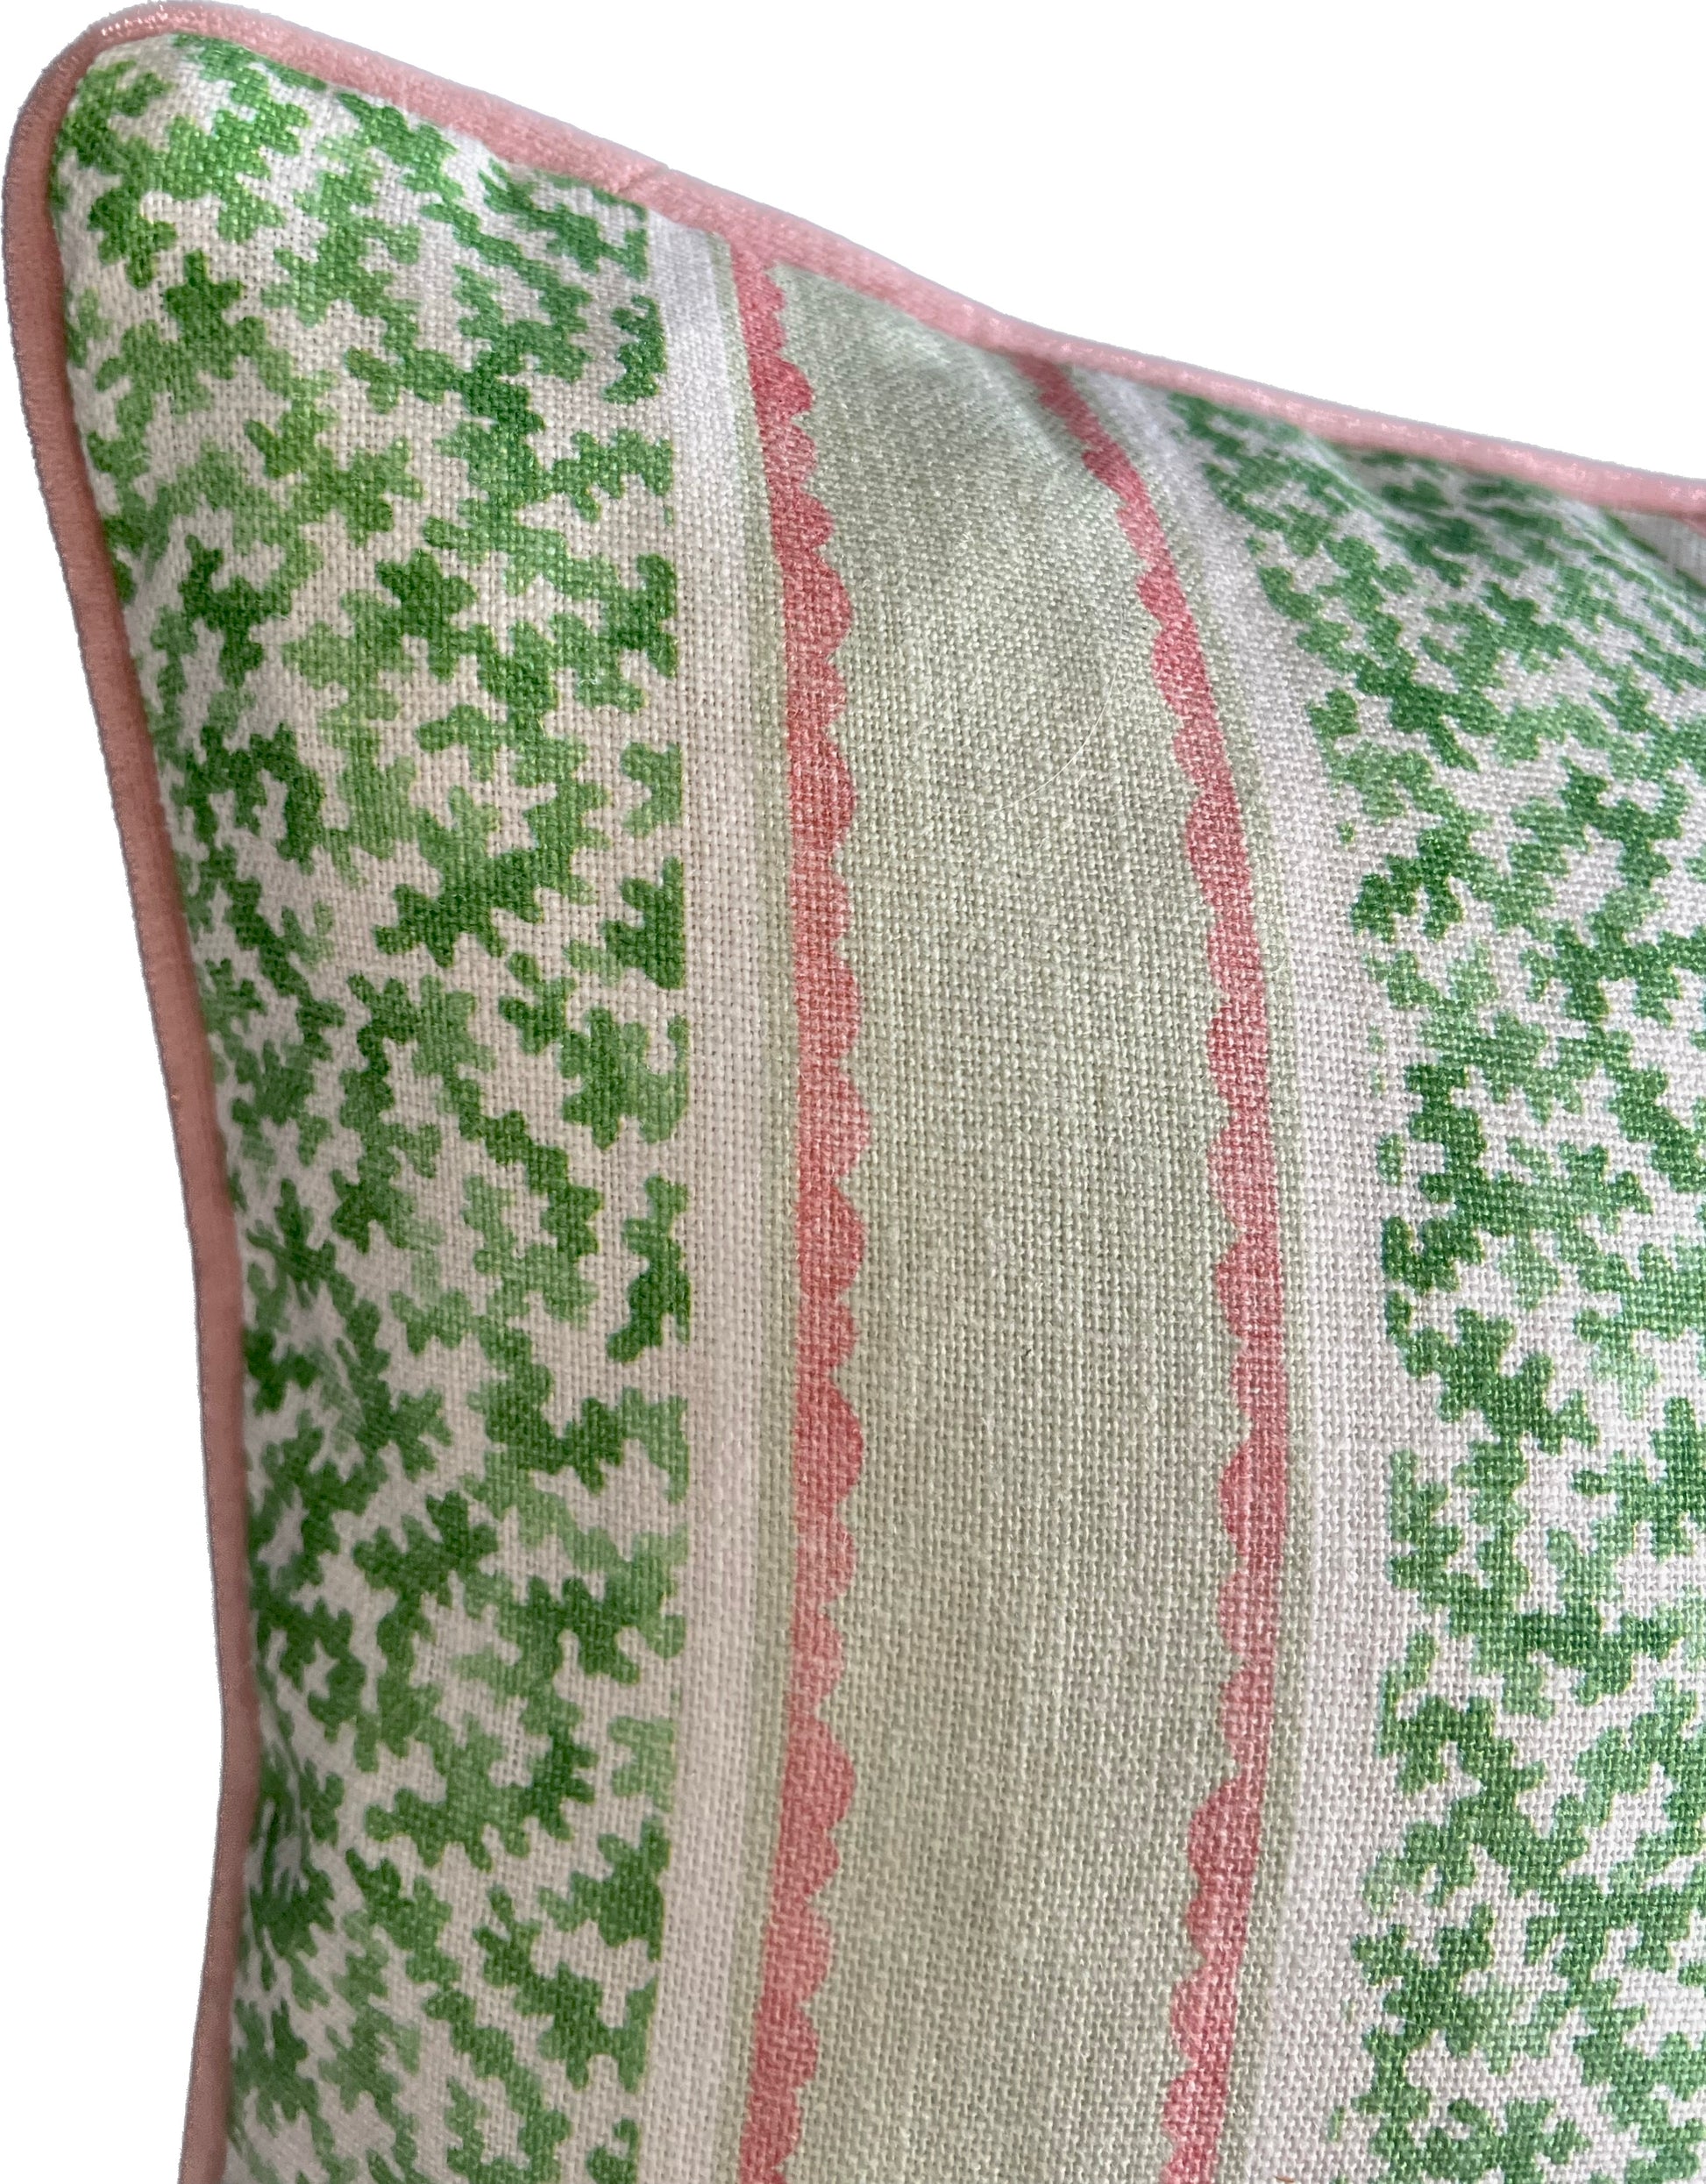 Linwood Cushions - Luxury cushions in Linwood Fabric (Garden Gate)